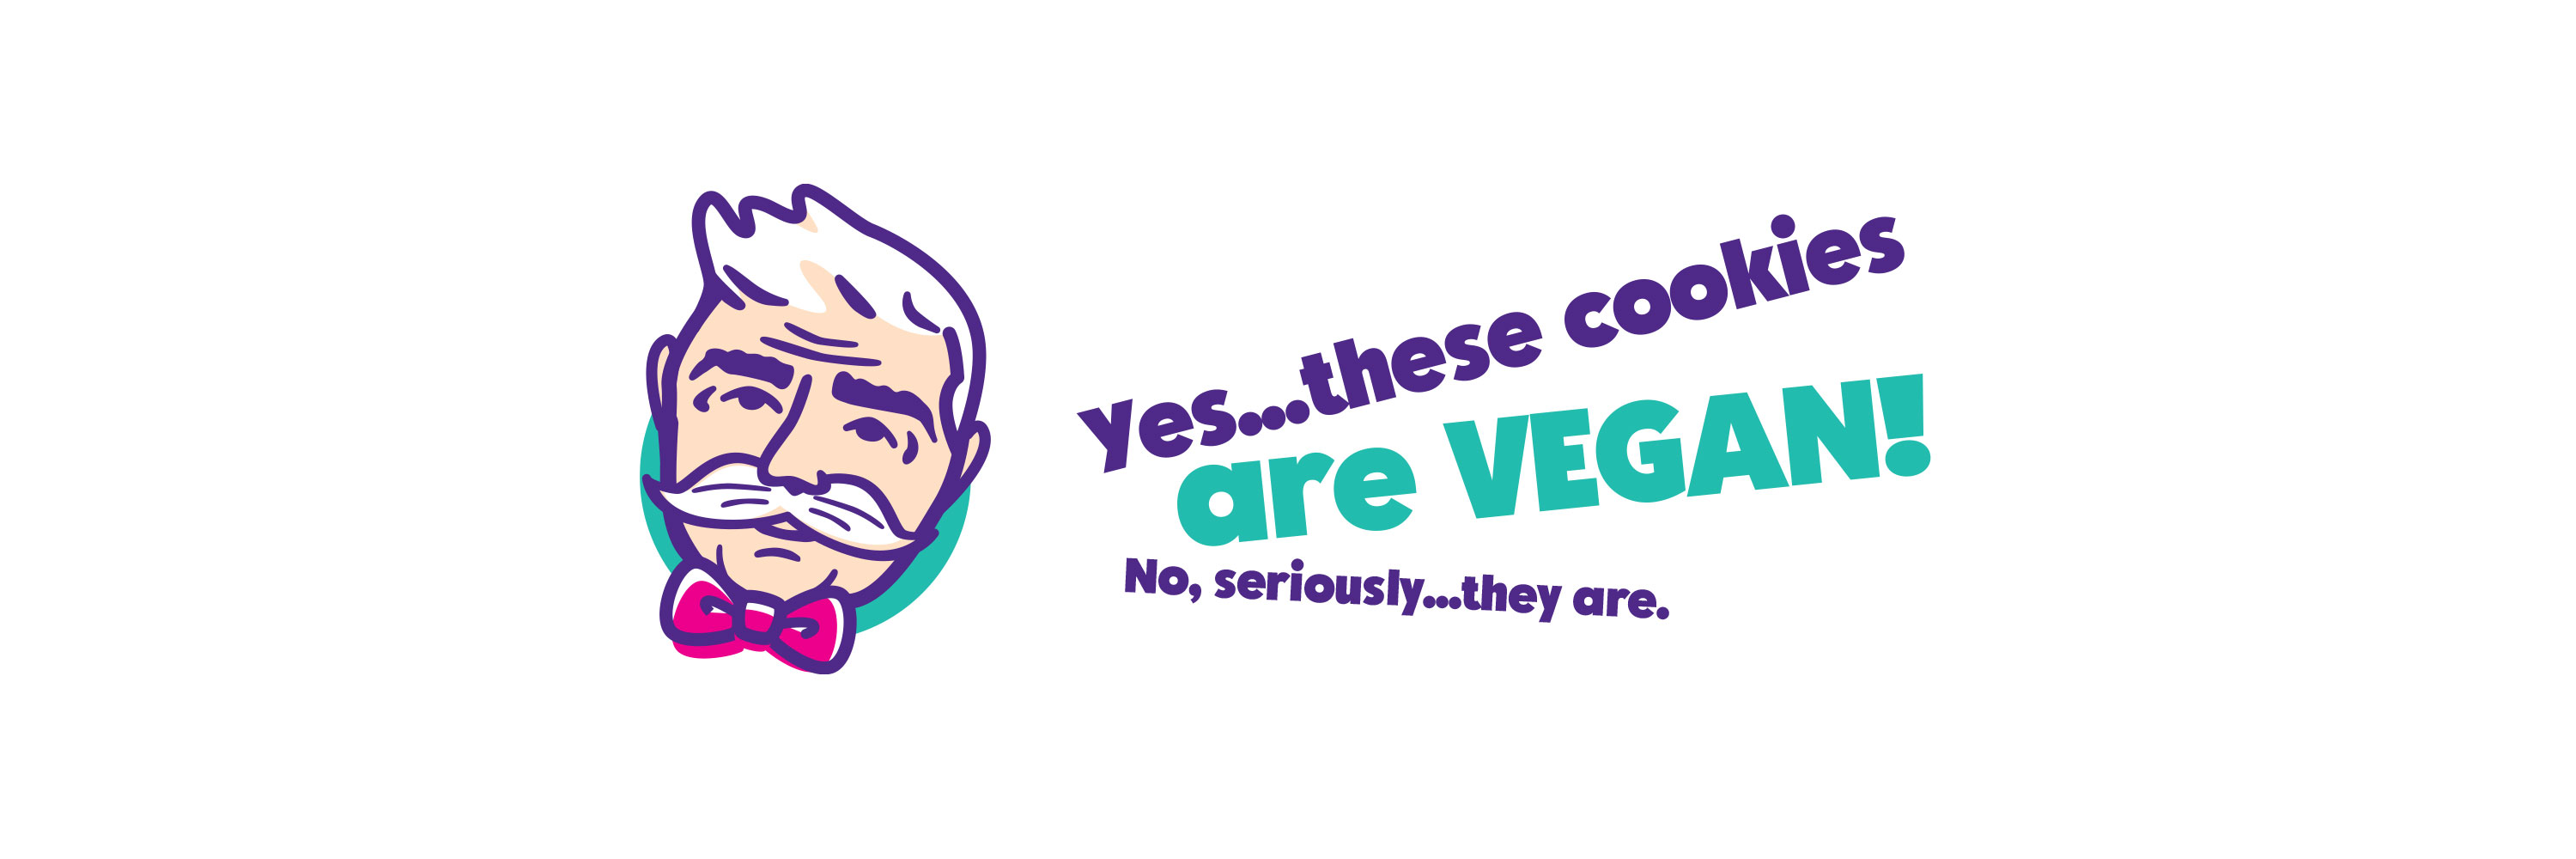 Vegan Snack Branding